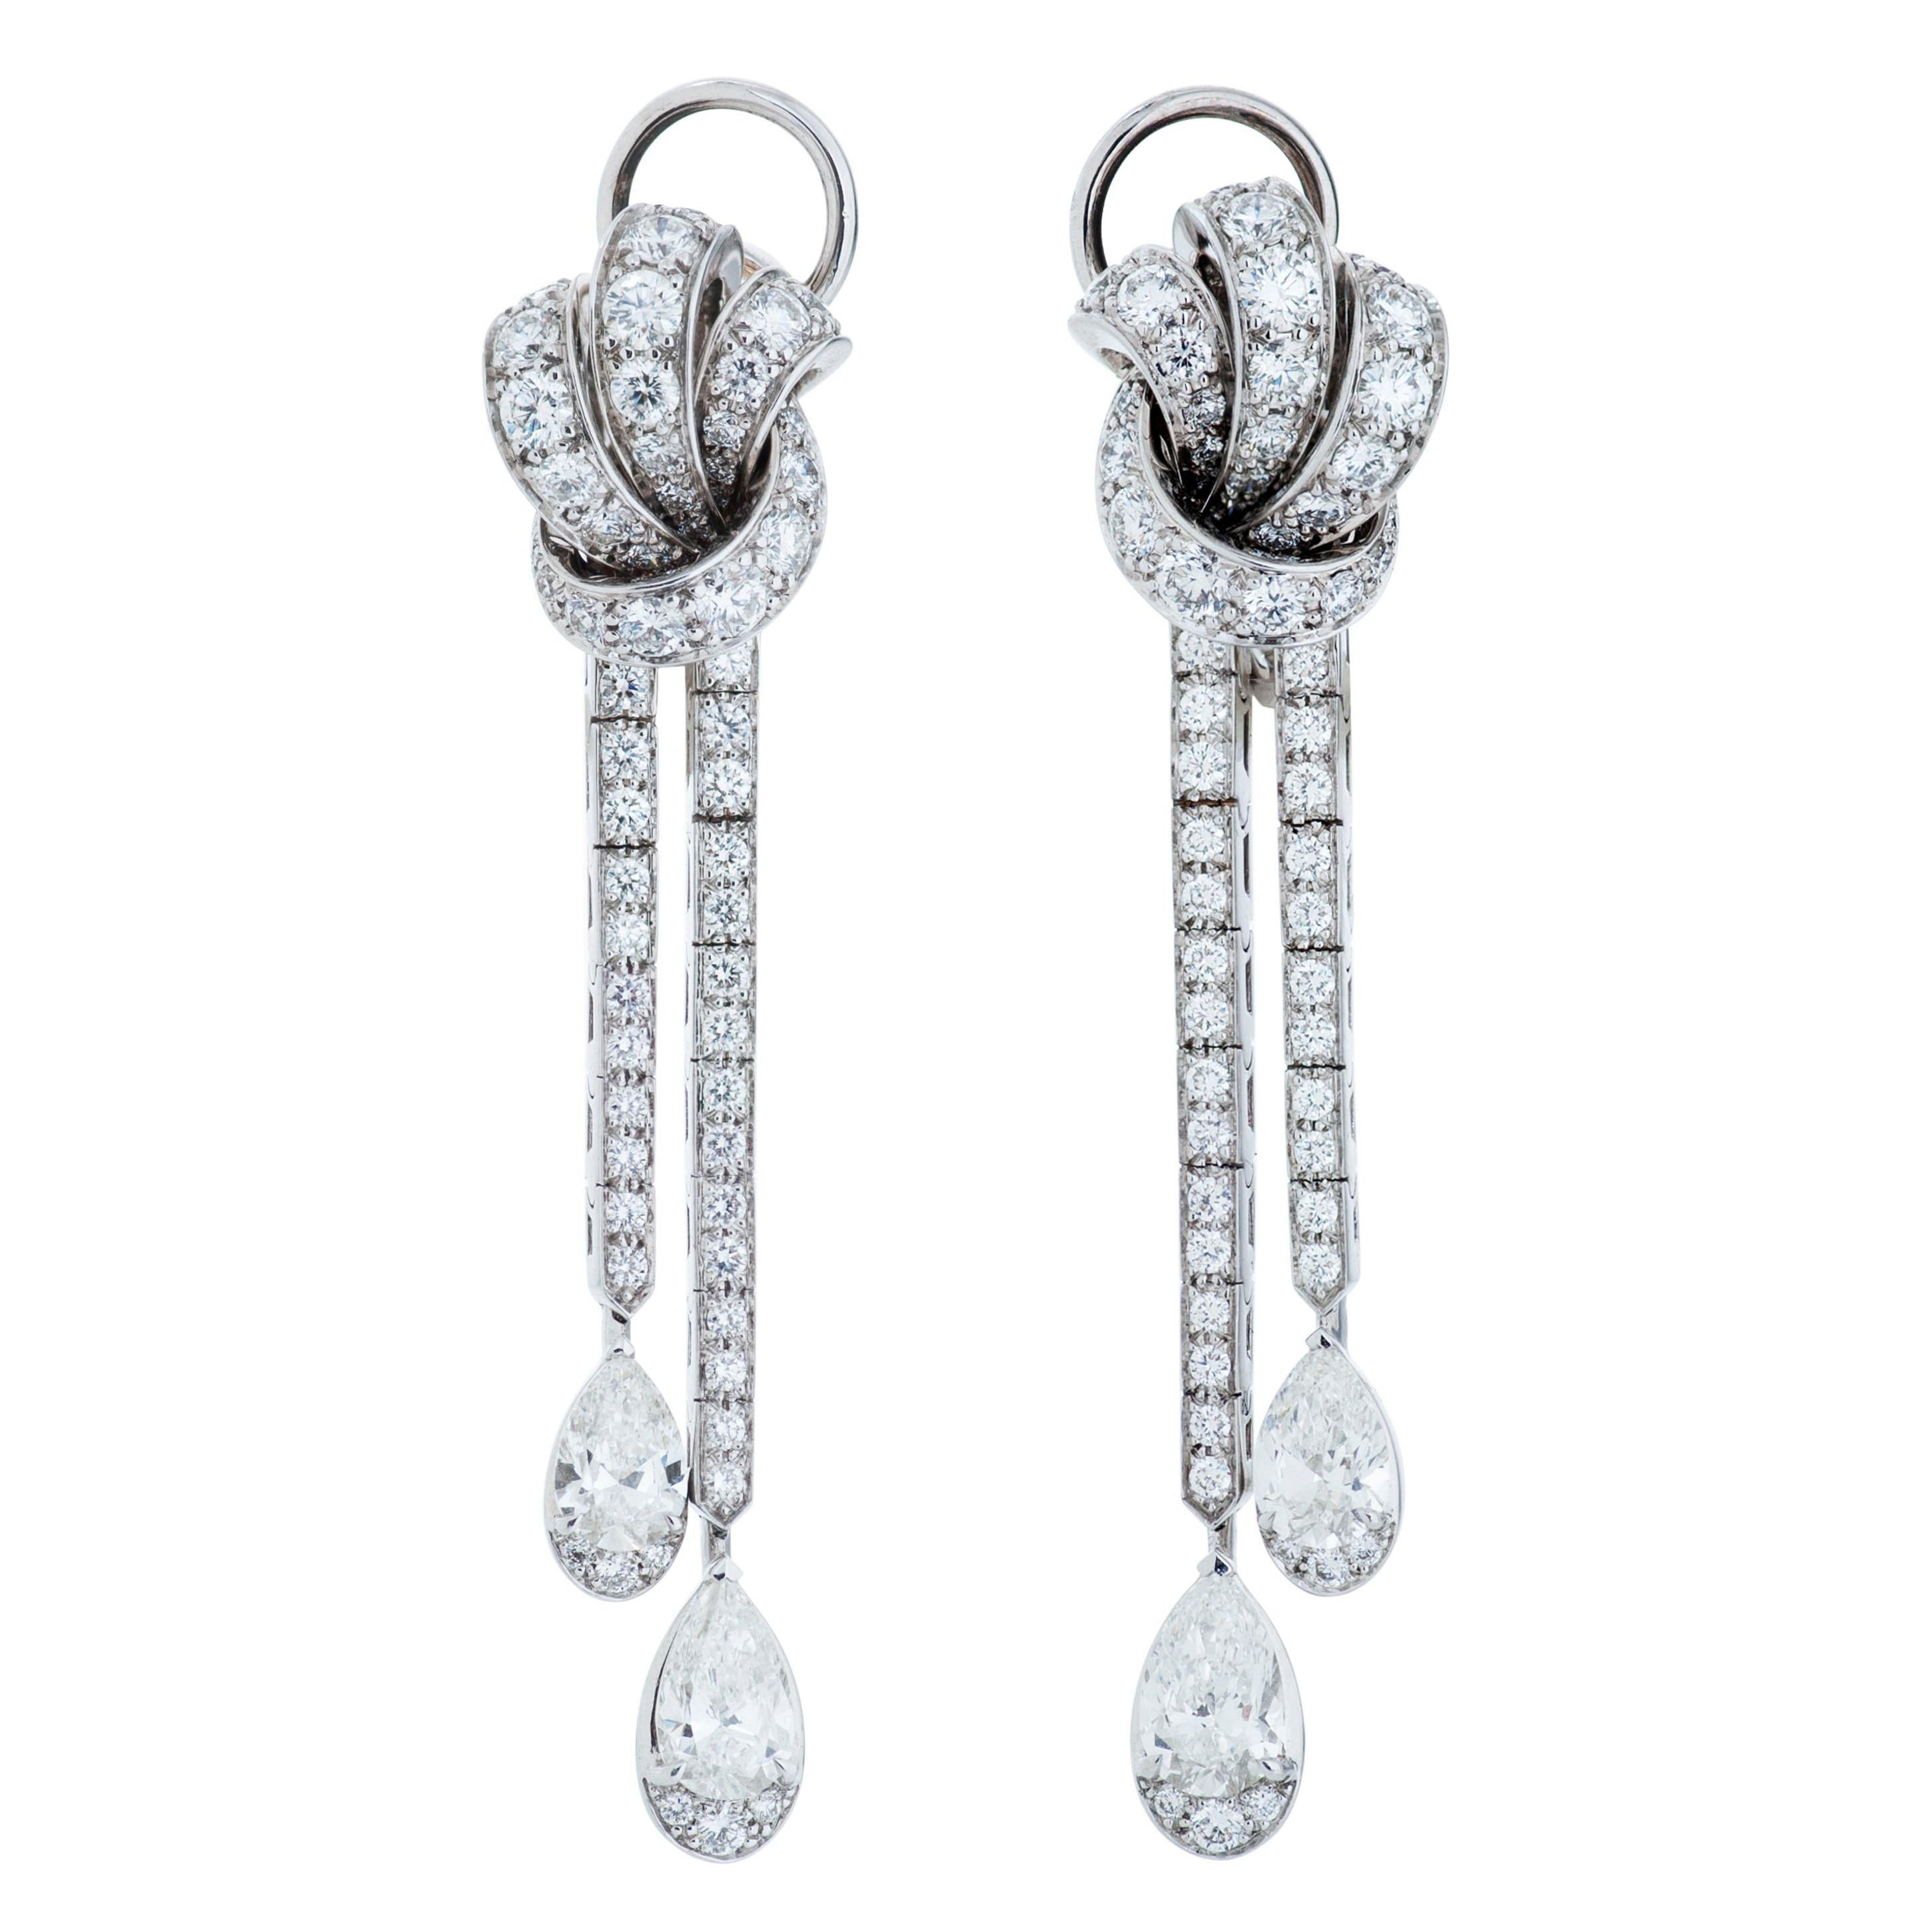 Graff Tilda's Bow Double Pave Diamond Drop Earrings in 18k White Gold